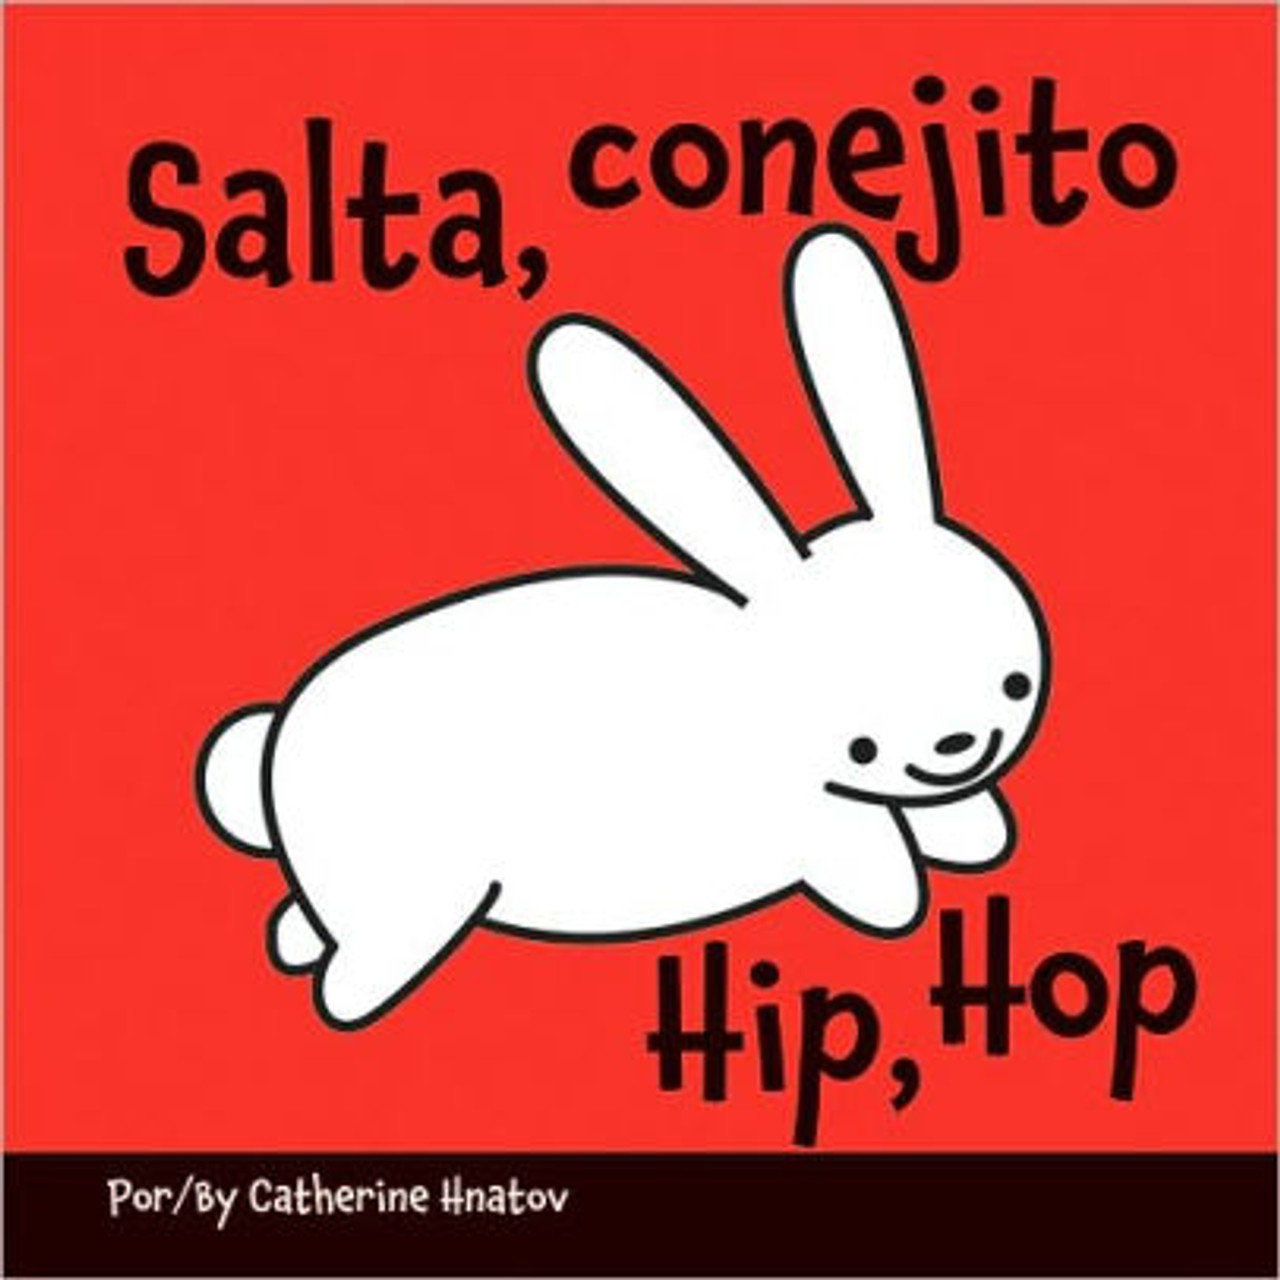 Hip, Hop/Salta, Conejito (Spanish/English) by Catherine Hnatov 